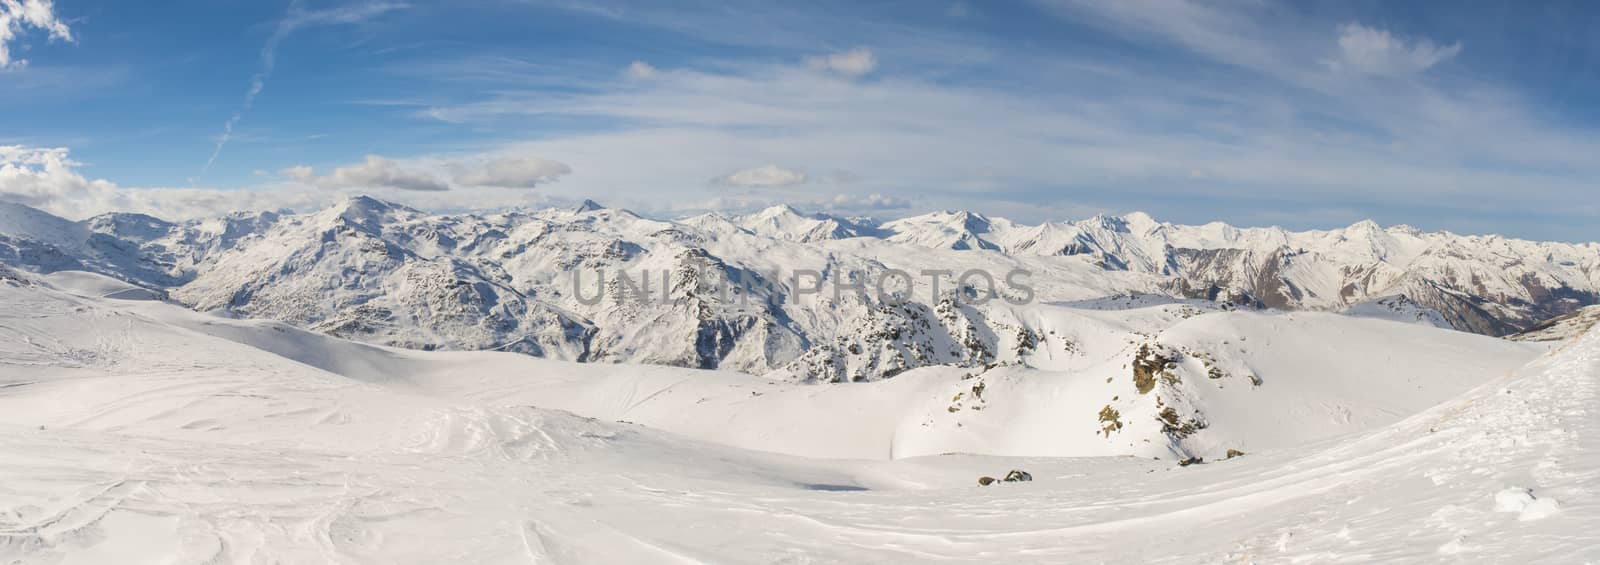 Ski slope piste in winter alpine resort with european alps mountain range in background